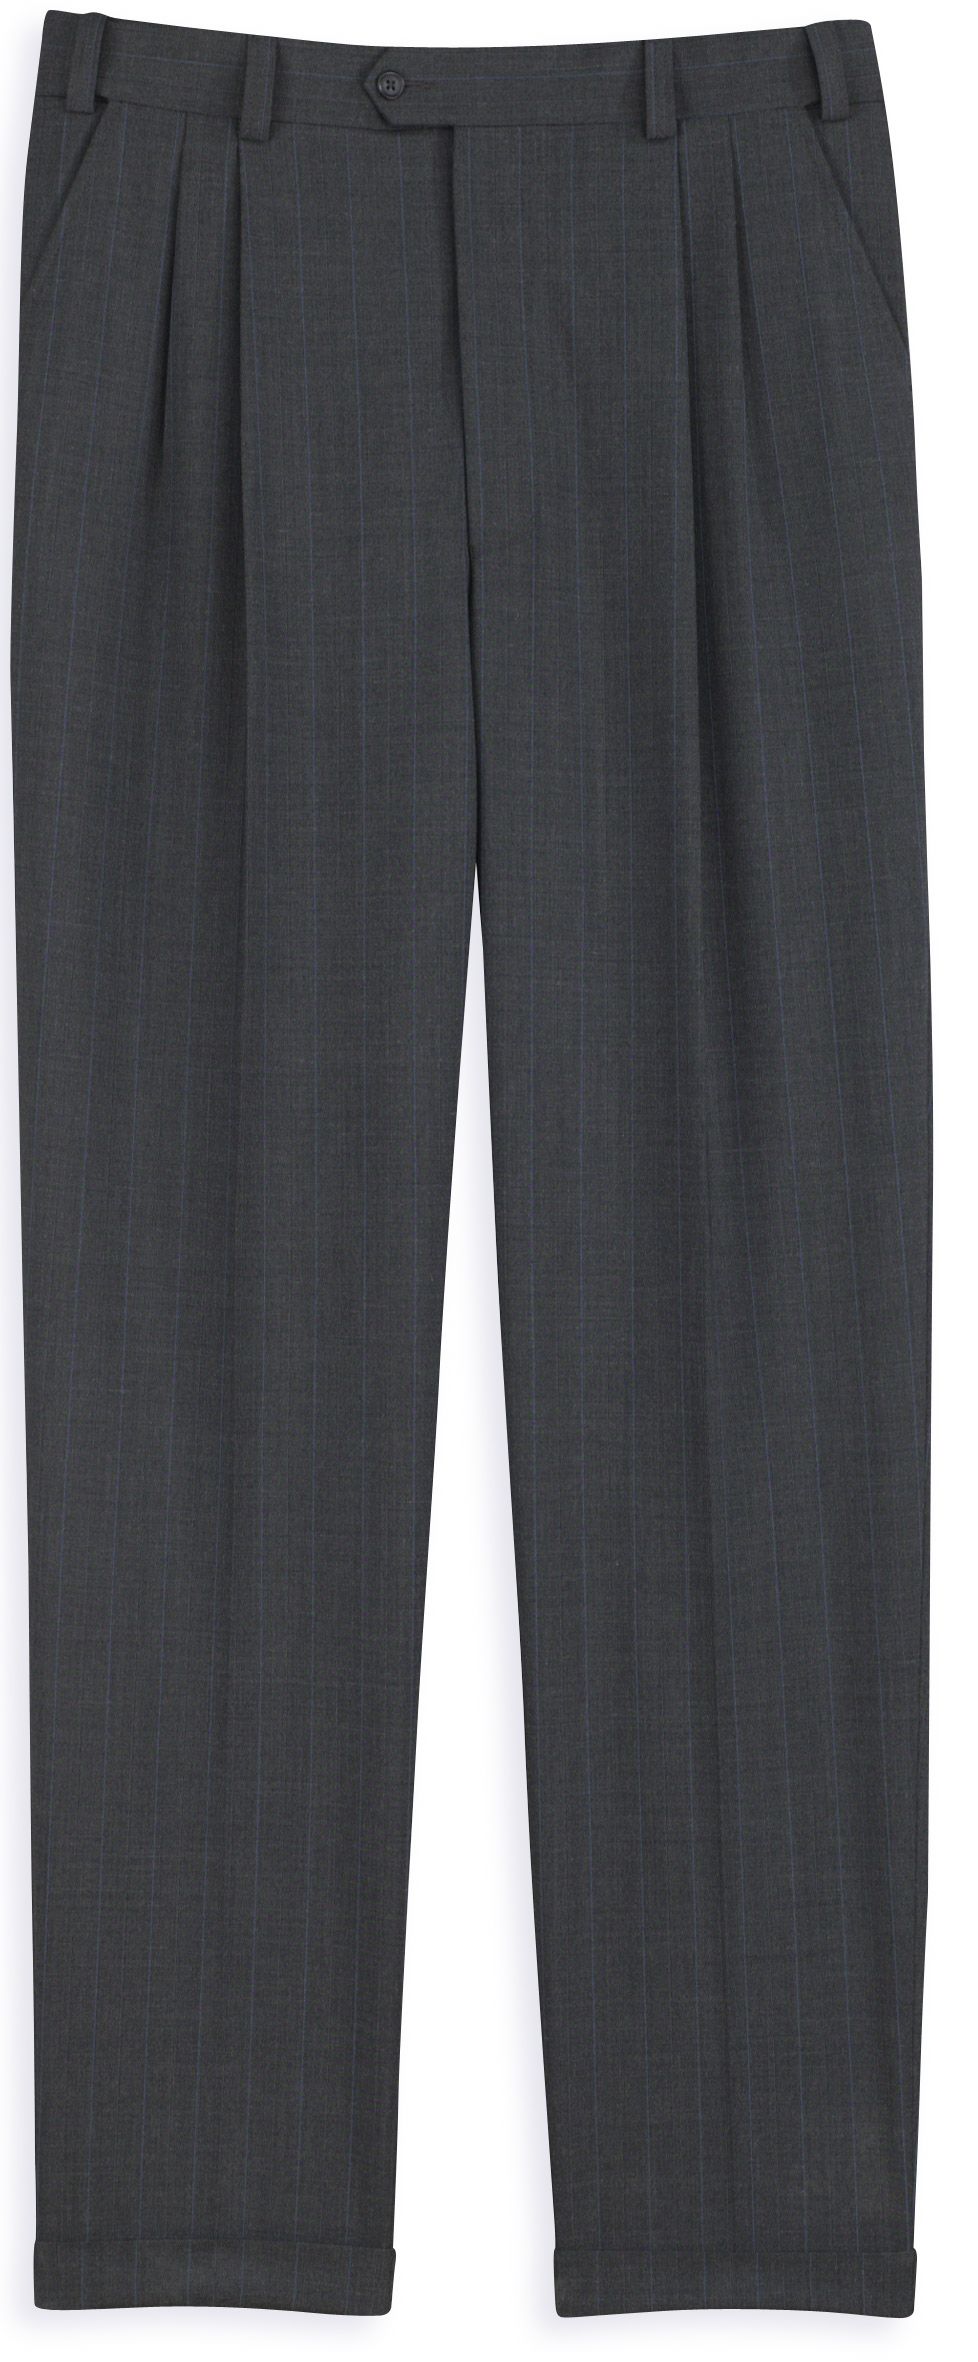 Comfort Zone Men's Suit Pant - Big & Tall